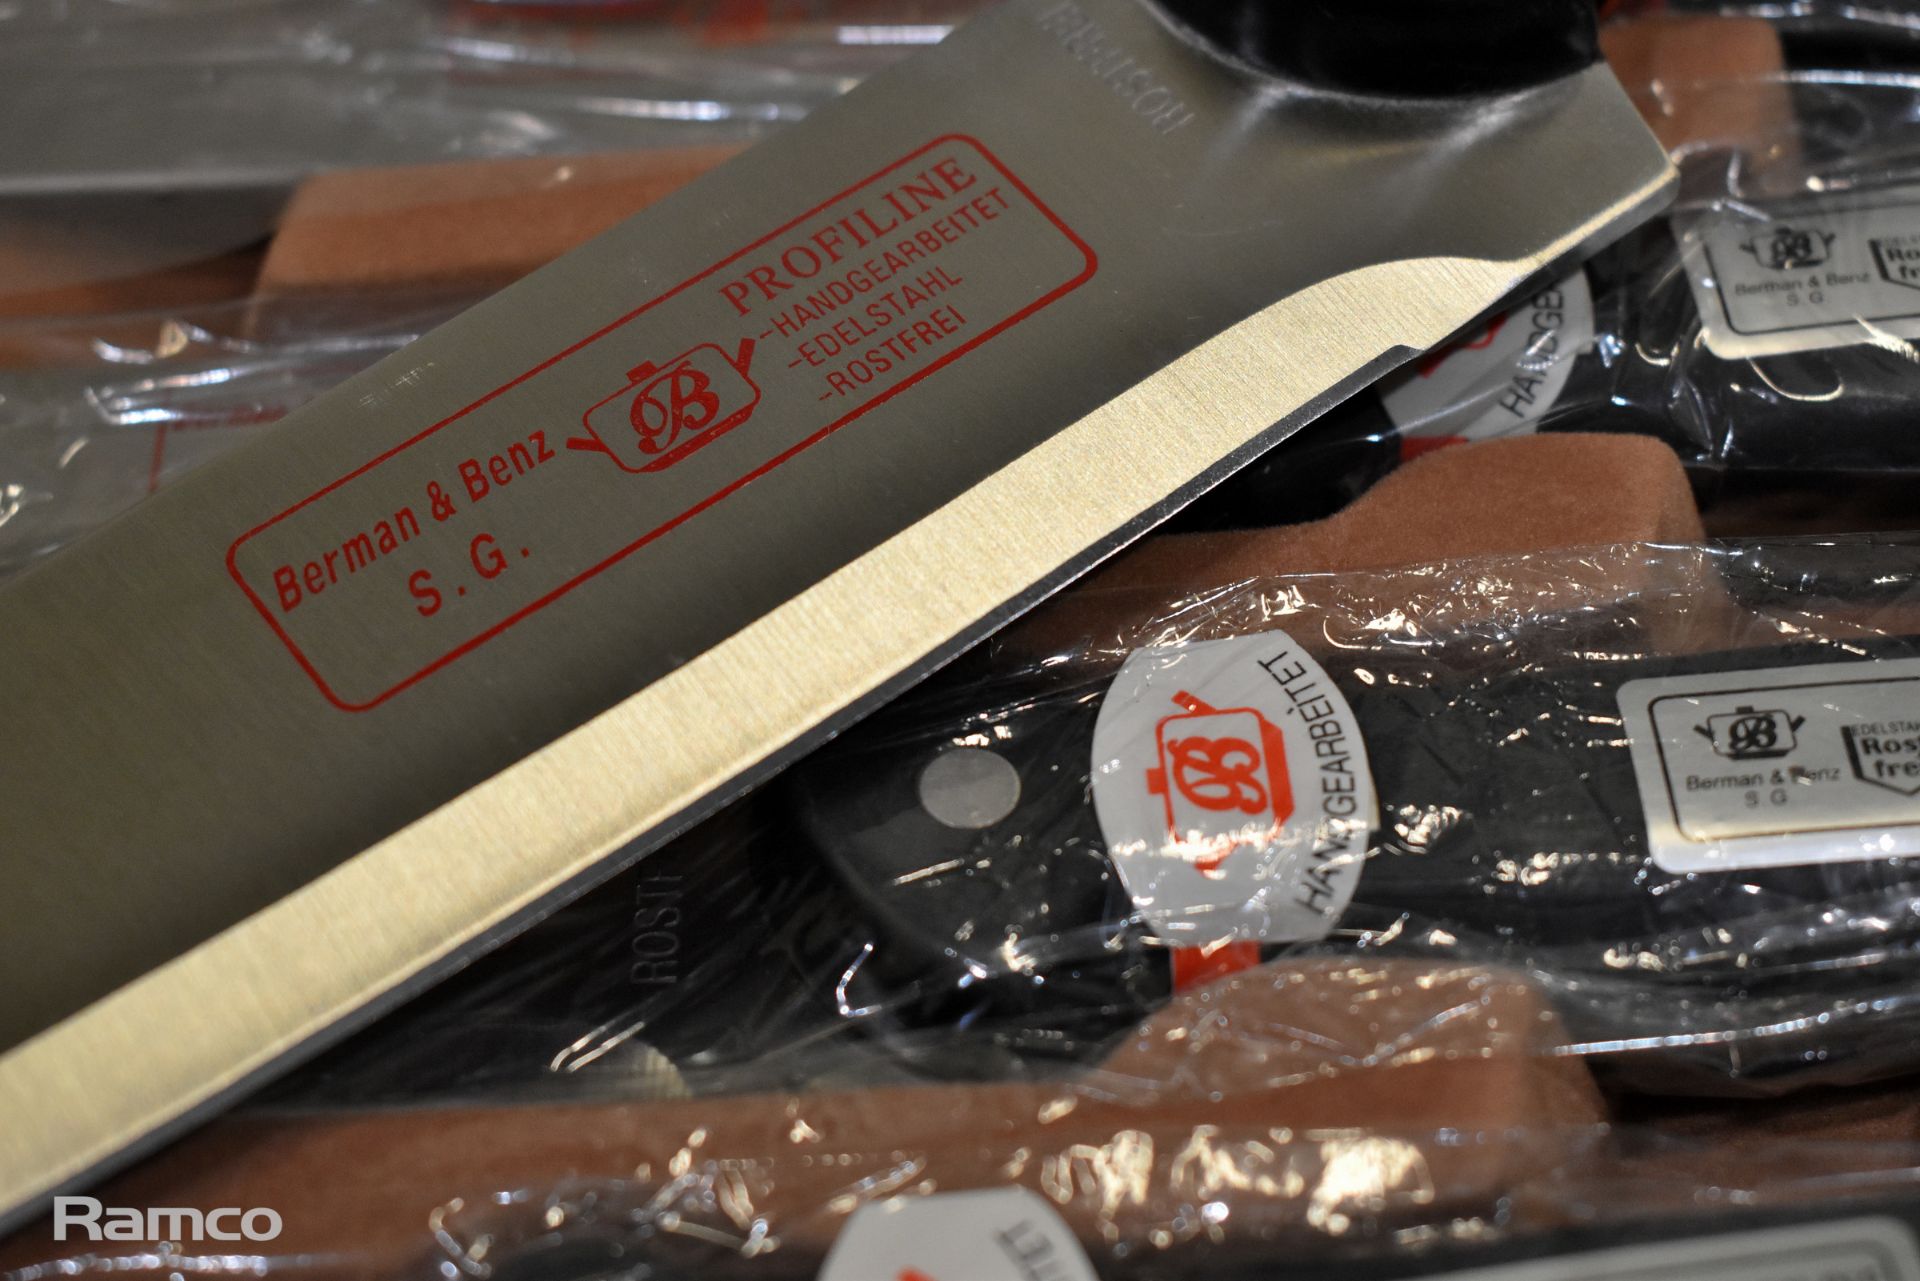 Berman & Benz kitchen knife set, utensil set in brief case - Image 4 of 10